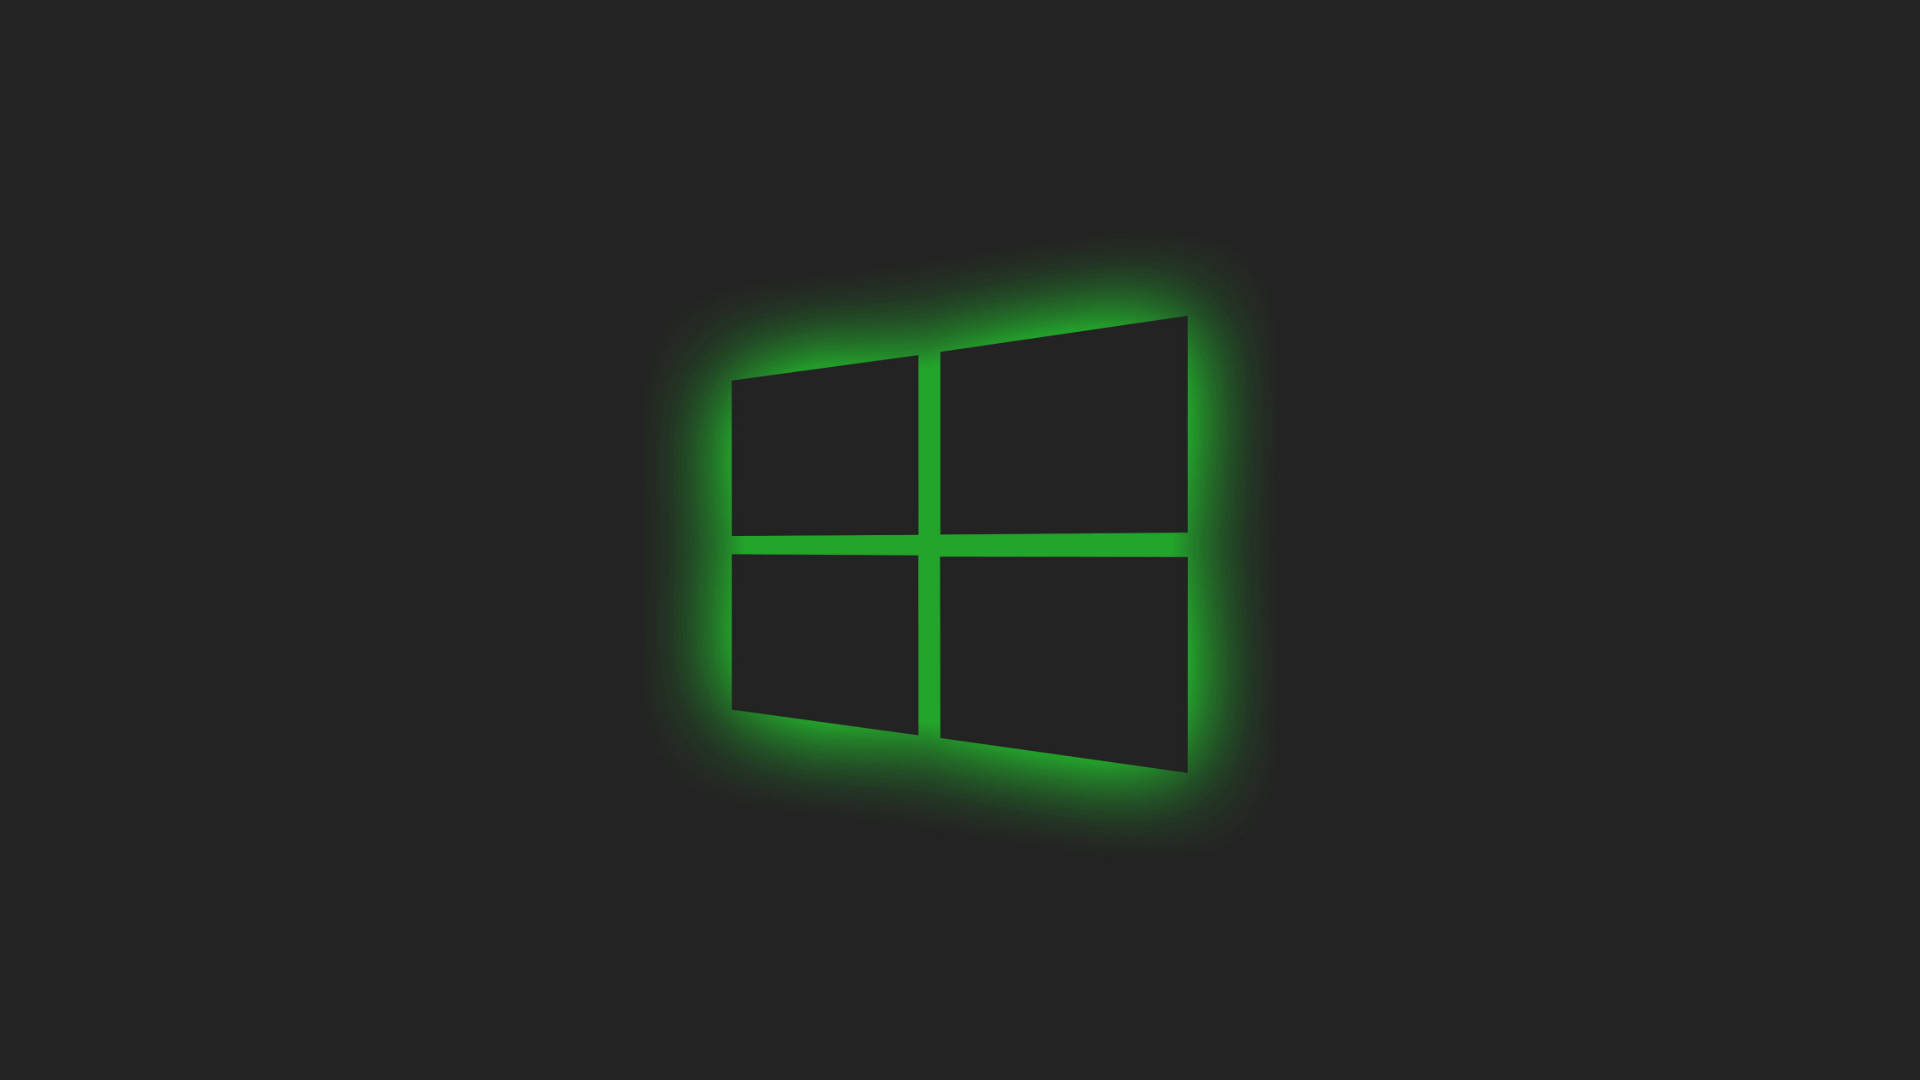 Black Windows 10 Hd Green Lights Background